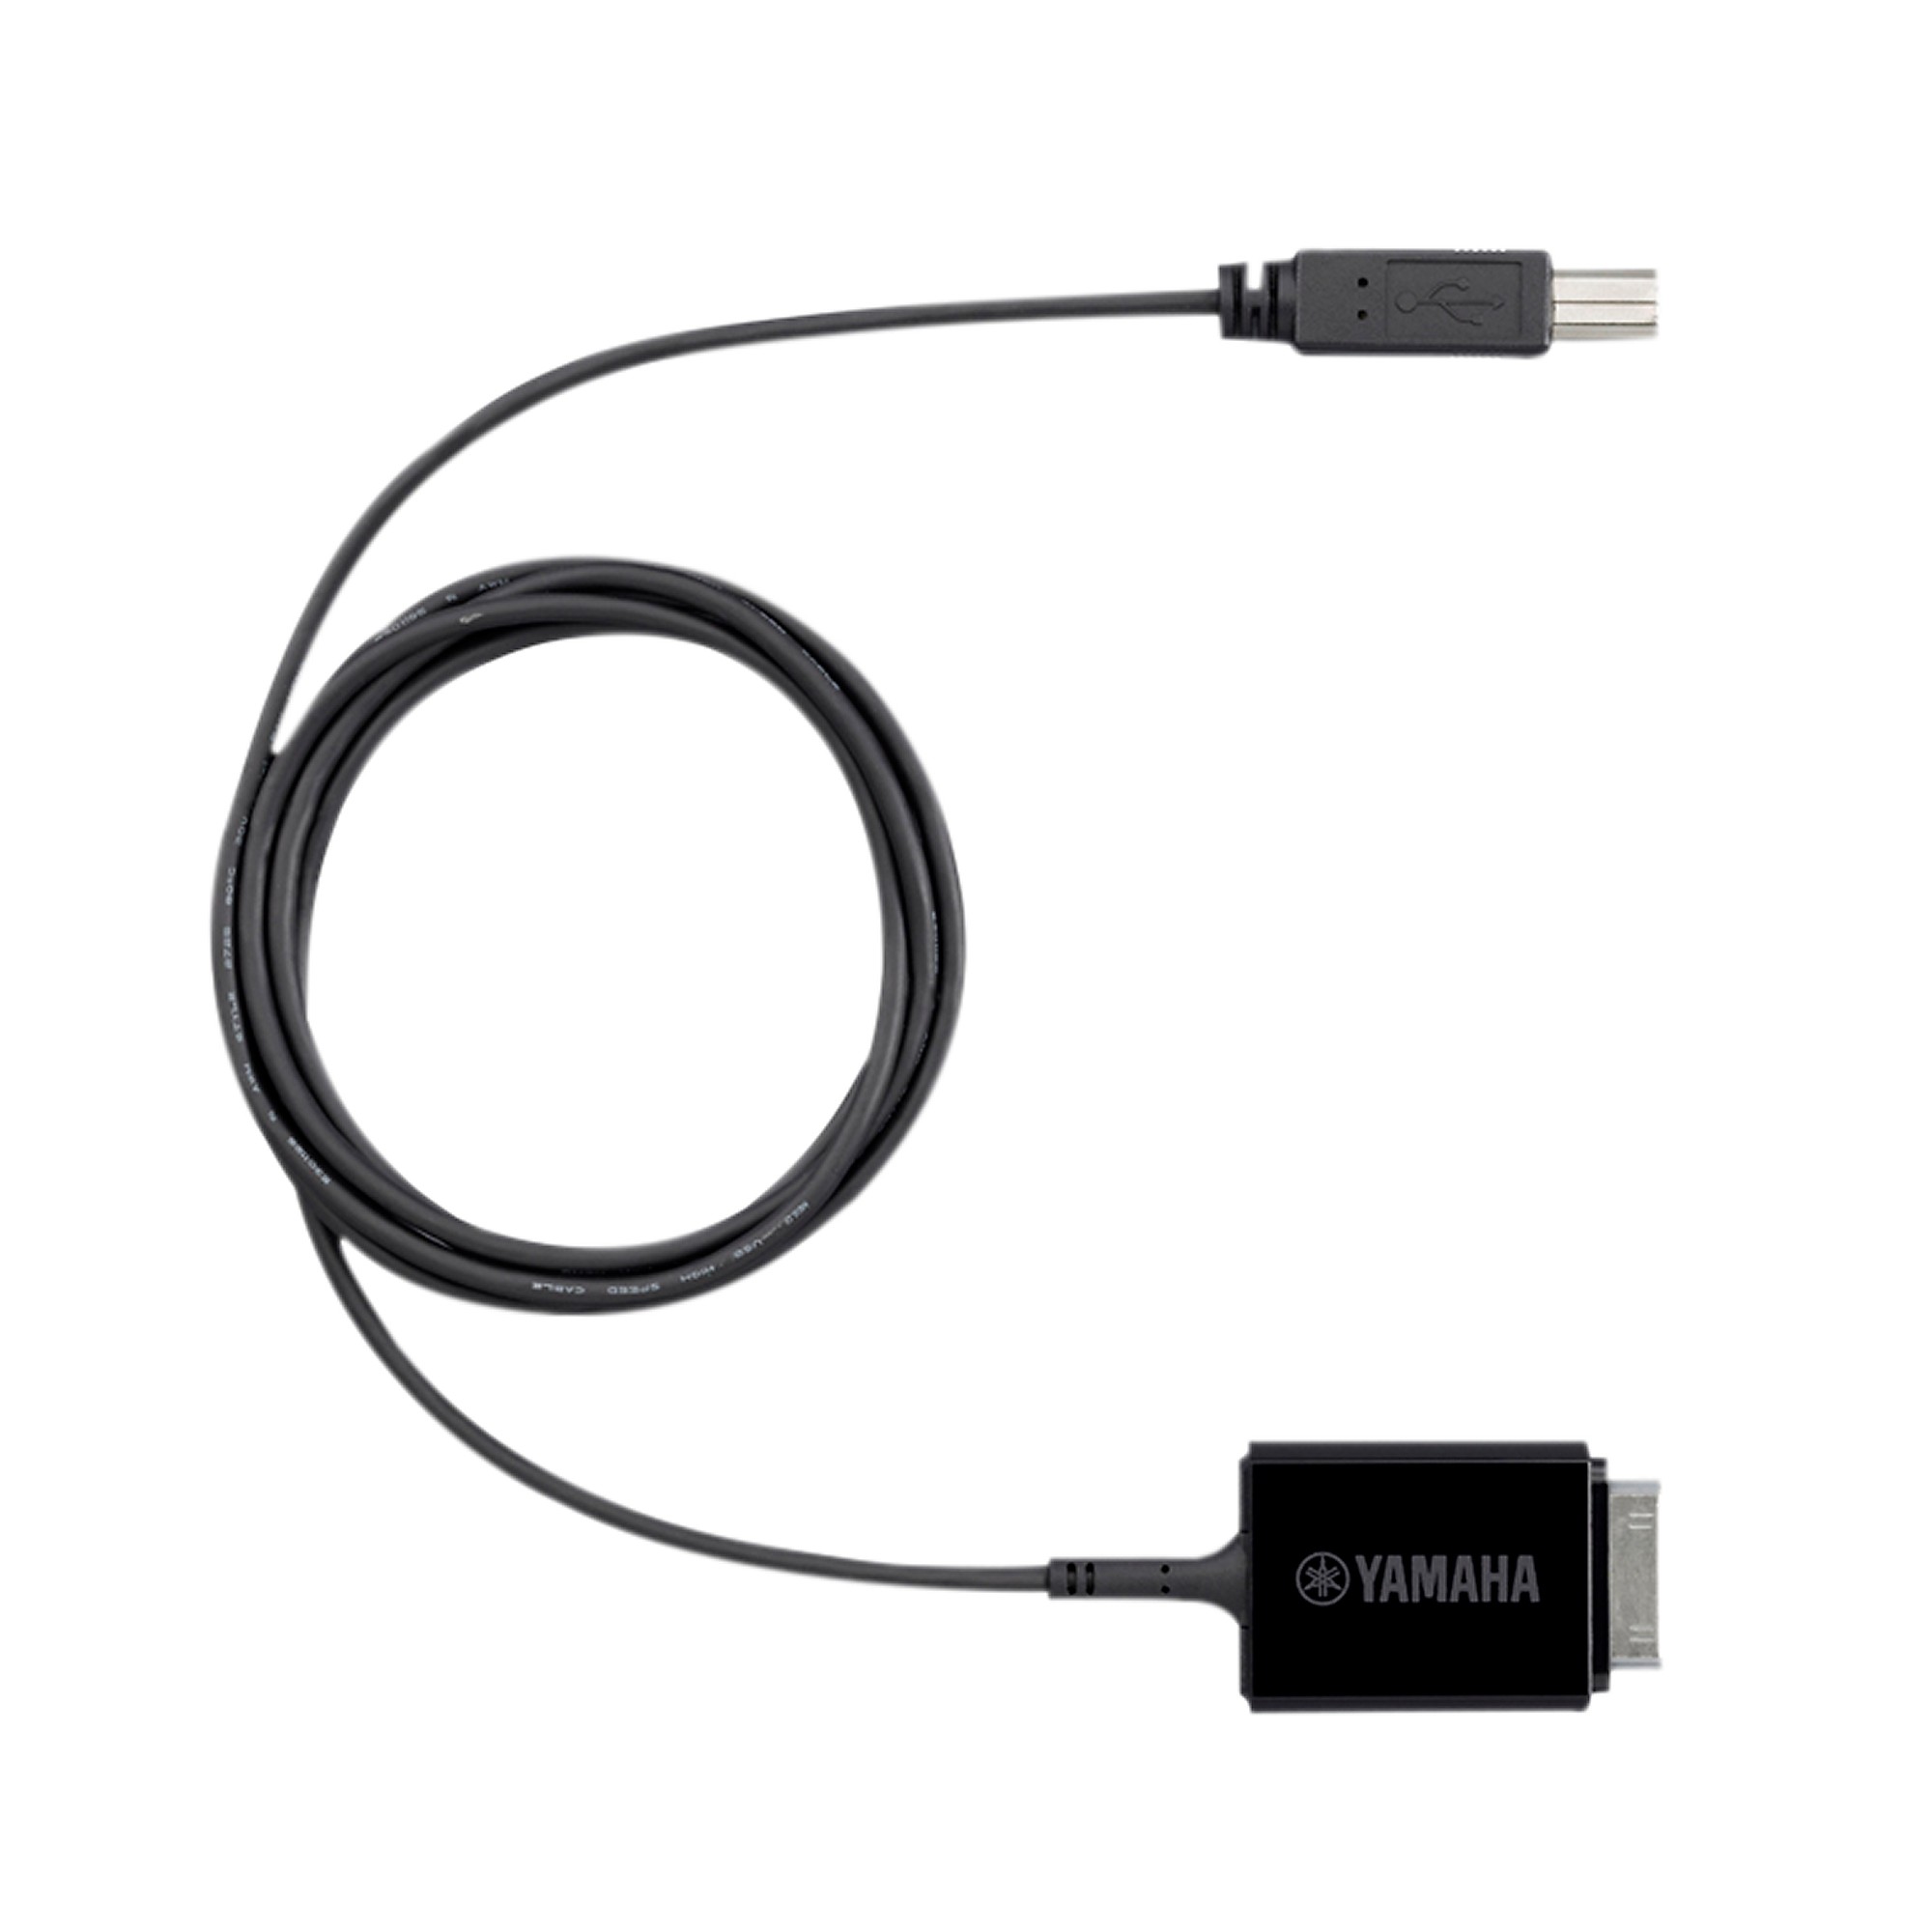 Yamaha USB MIDI Interface Cable for iPhone/iPad | Guitar